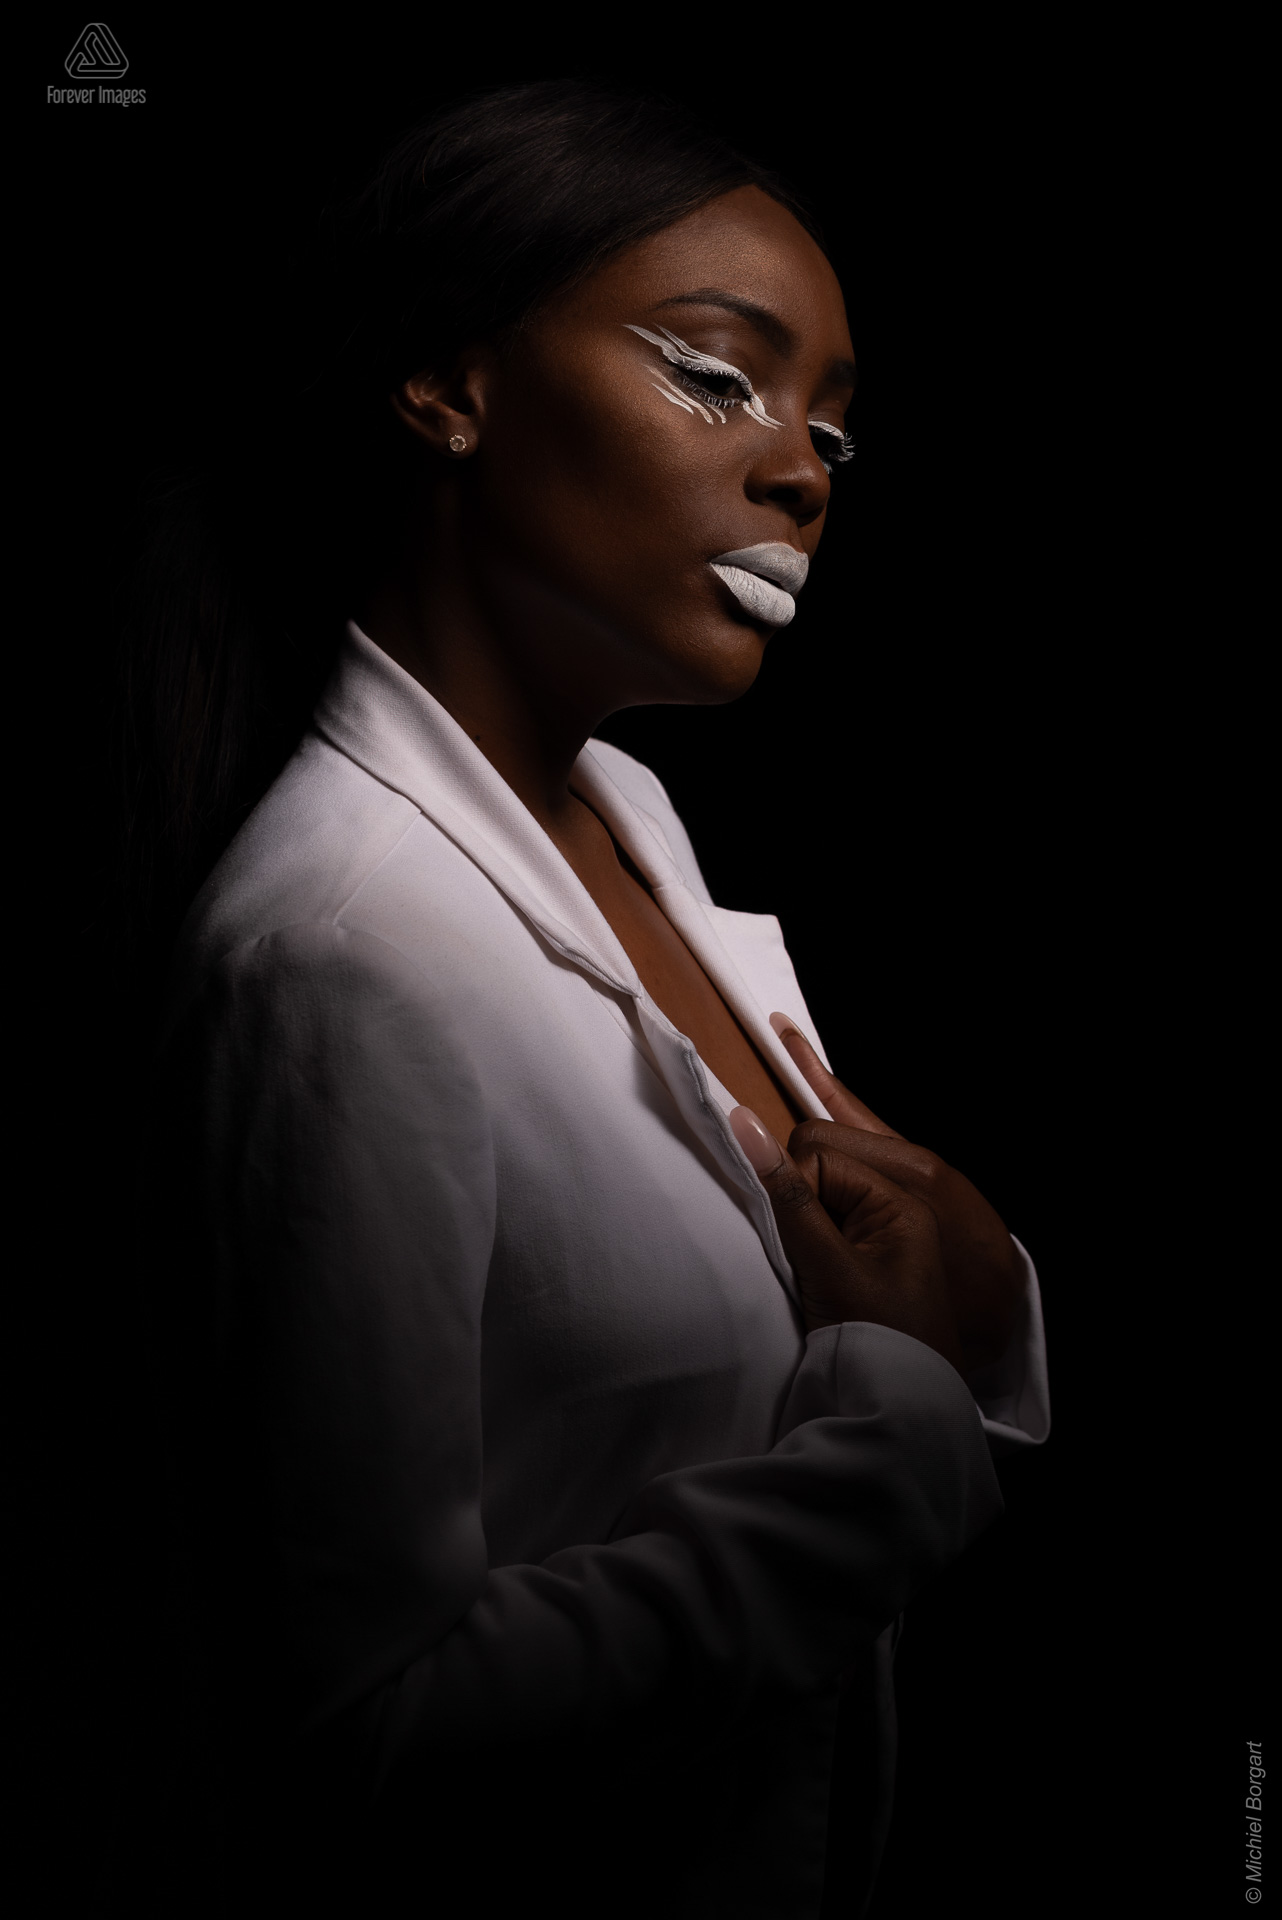 Portretfoto glamourshoot witte make-up wit jasje | Mariana Pietersz Natasha Mondesir | Portretfotograaf Michiel Borgart - Forever Images.